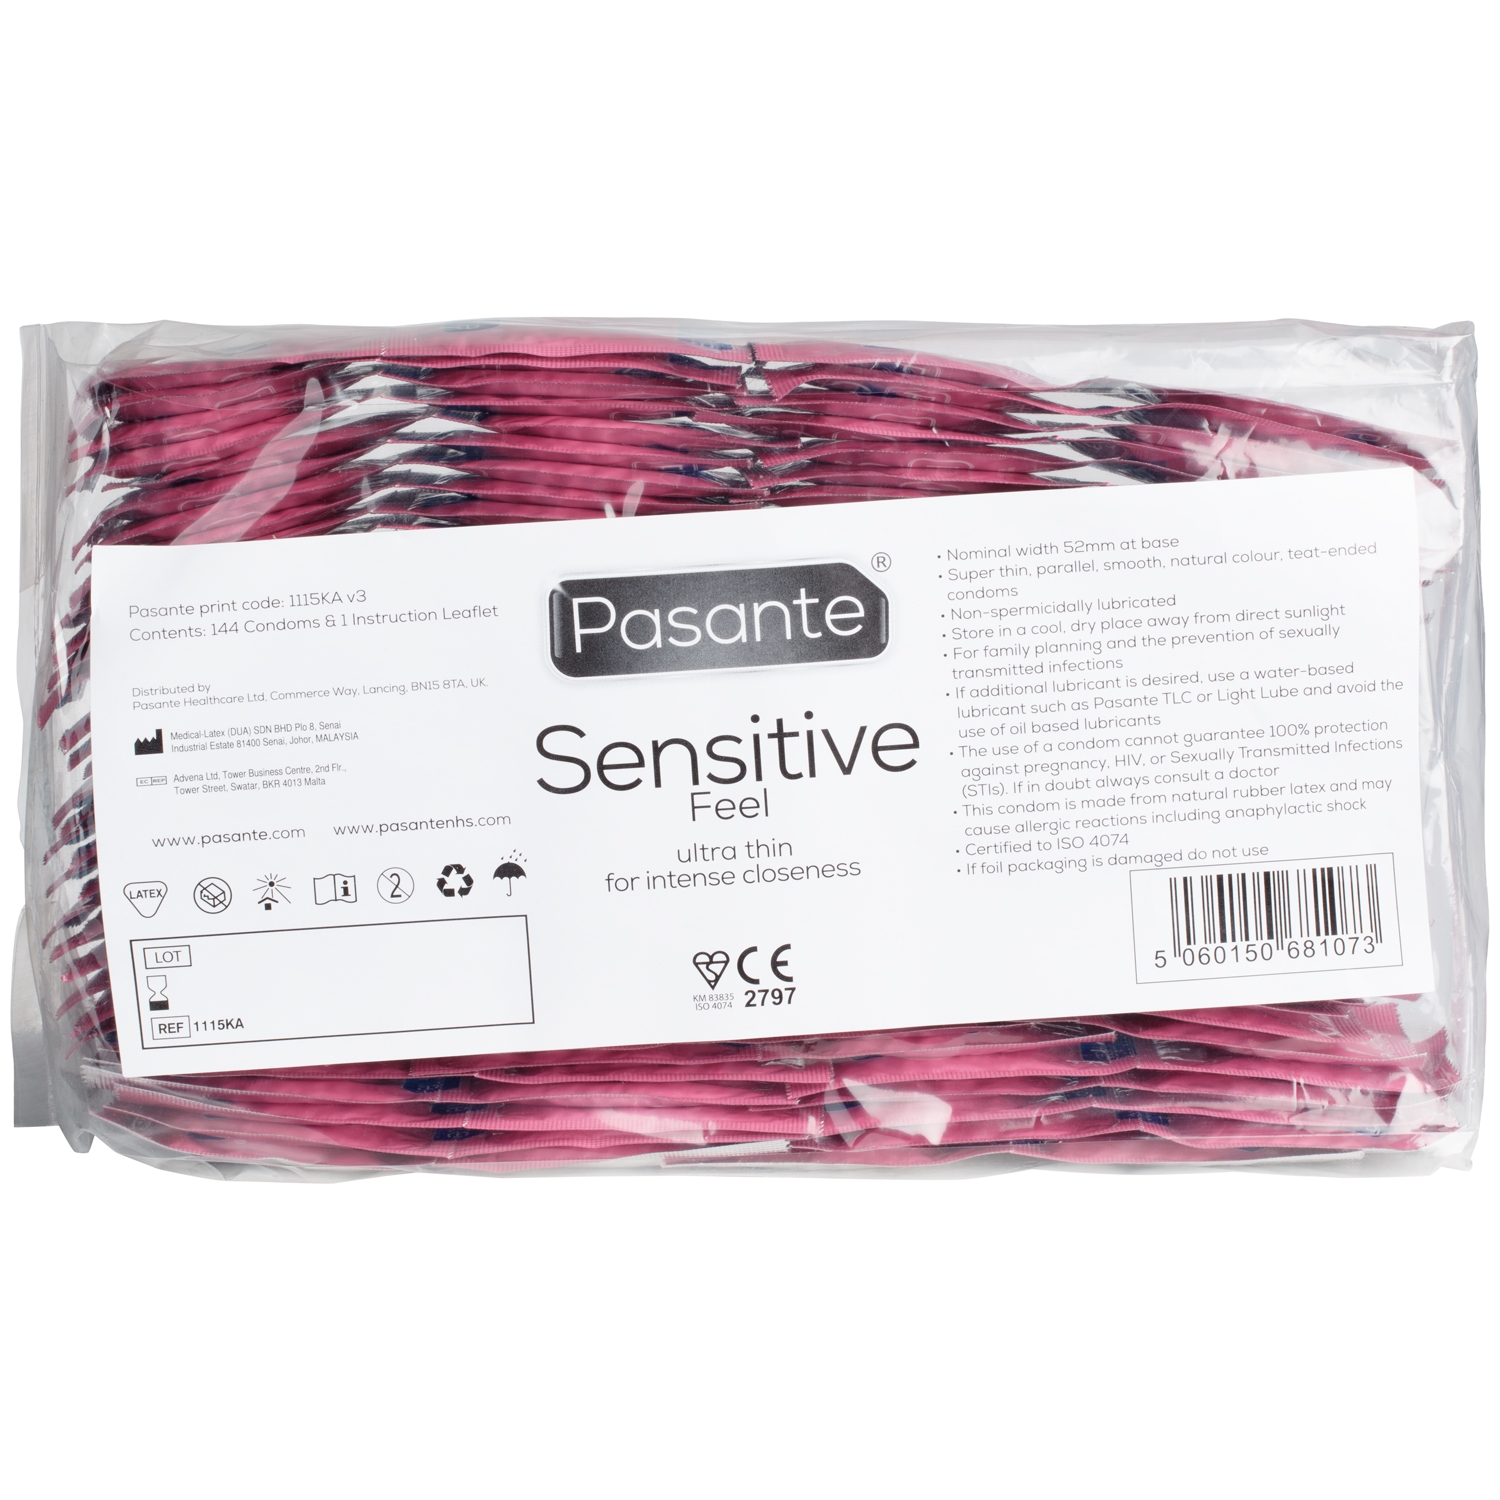 Pasante Sensitive Feel Ultra Thin Kondomer 144 stk - Klar